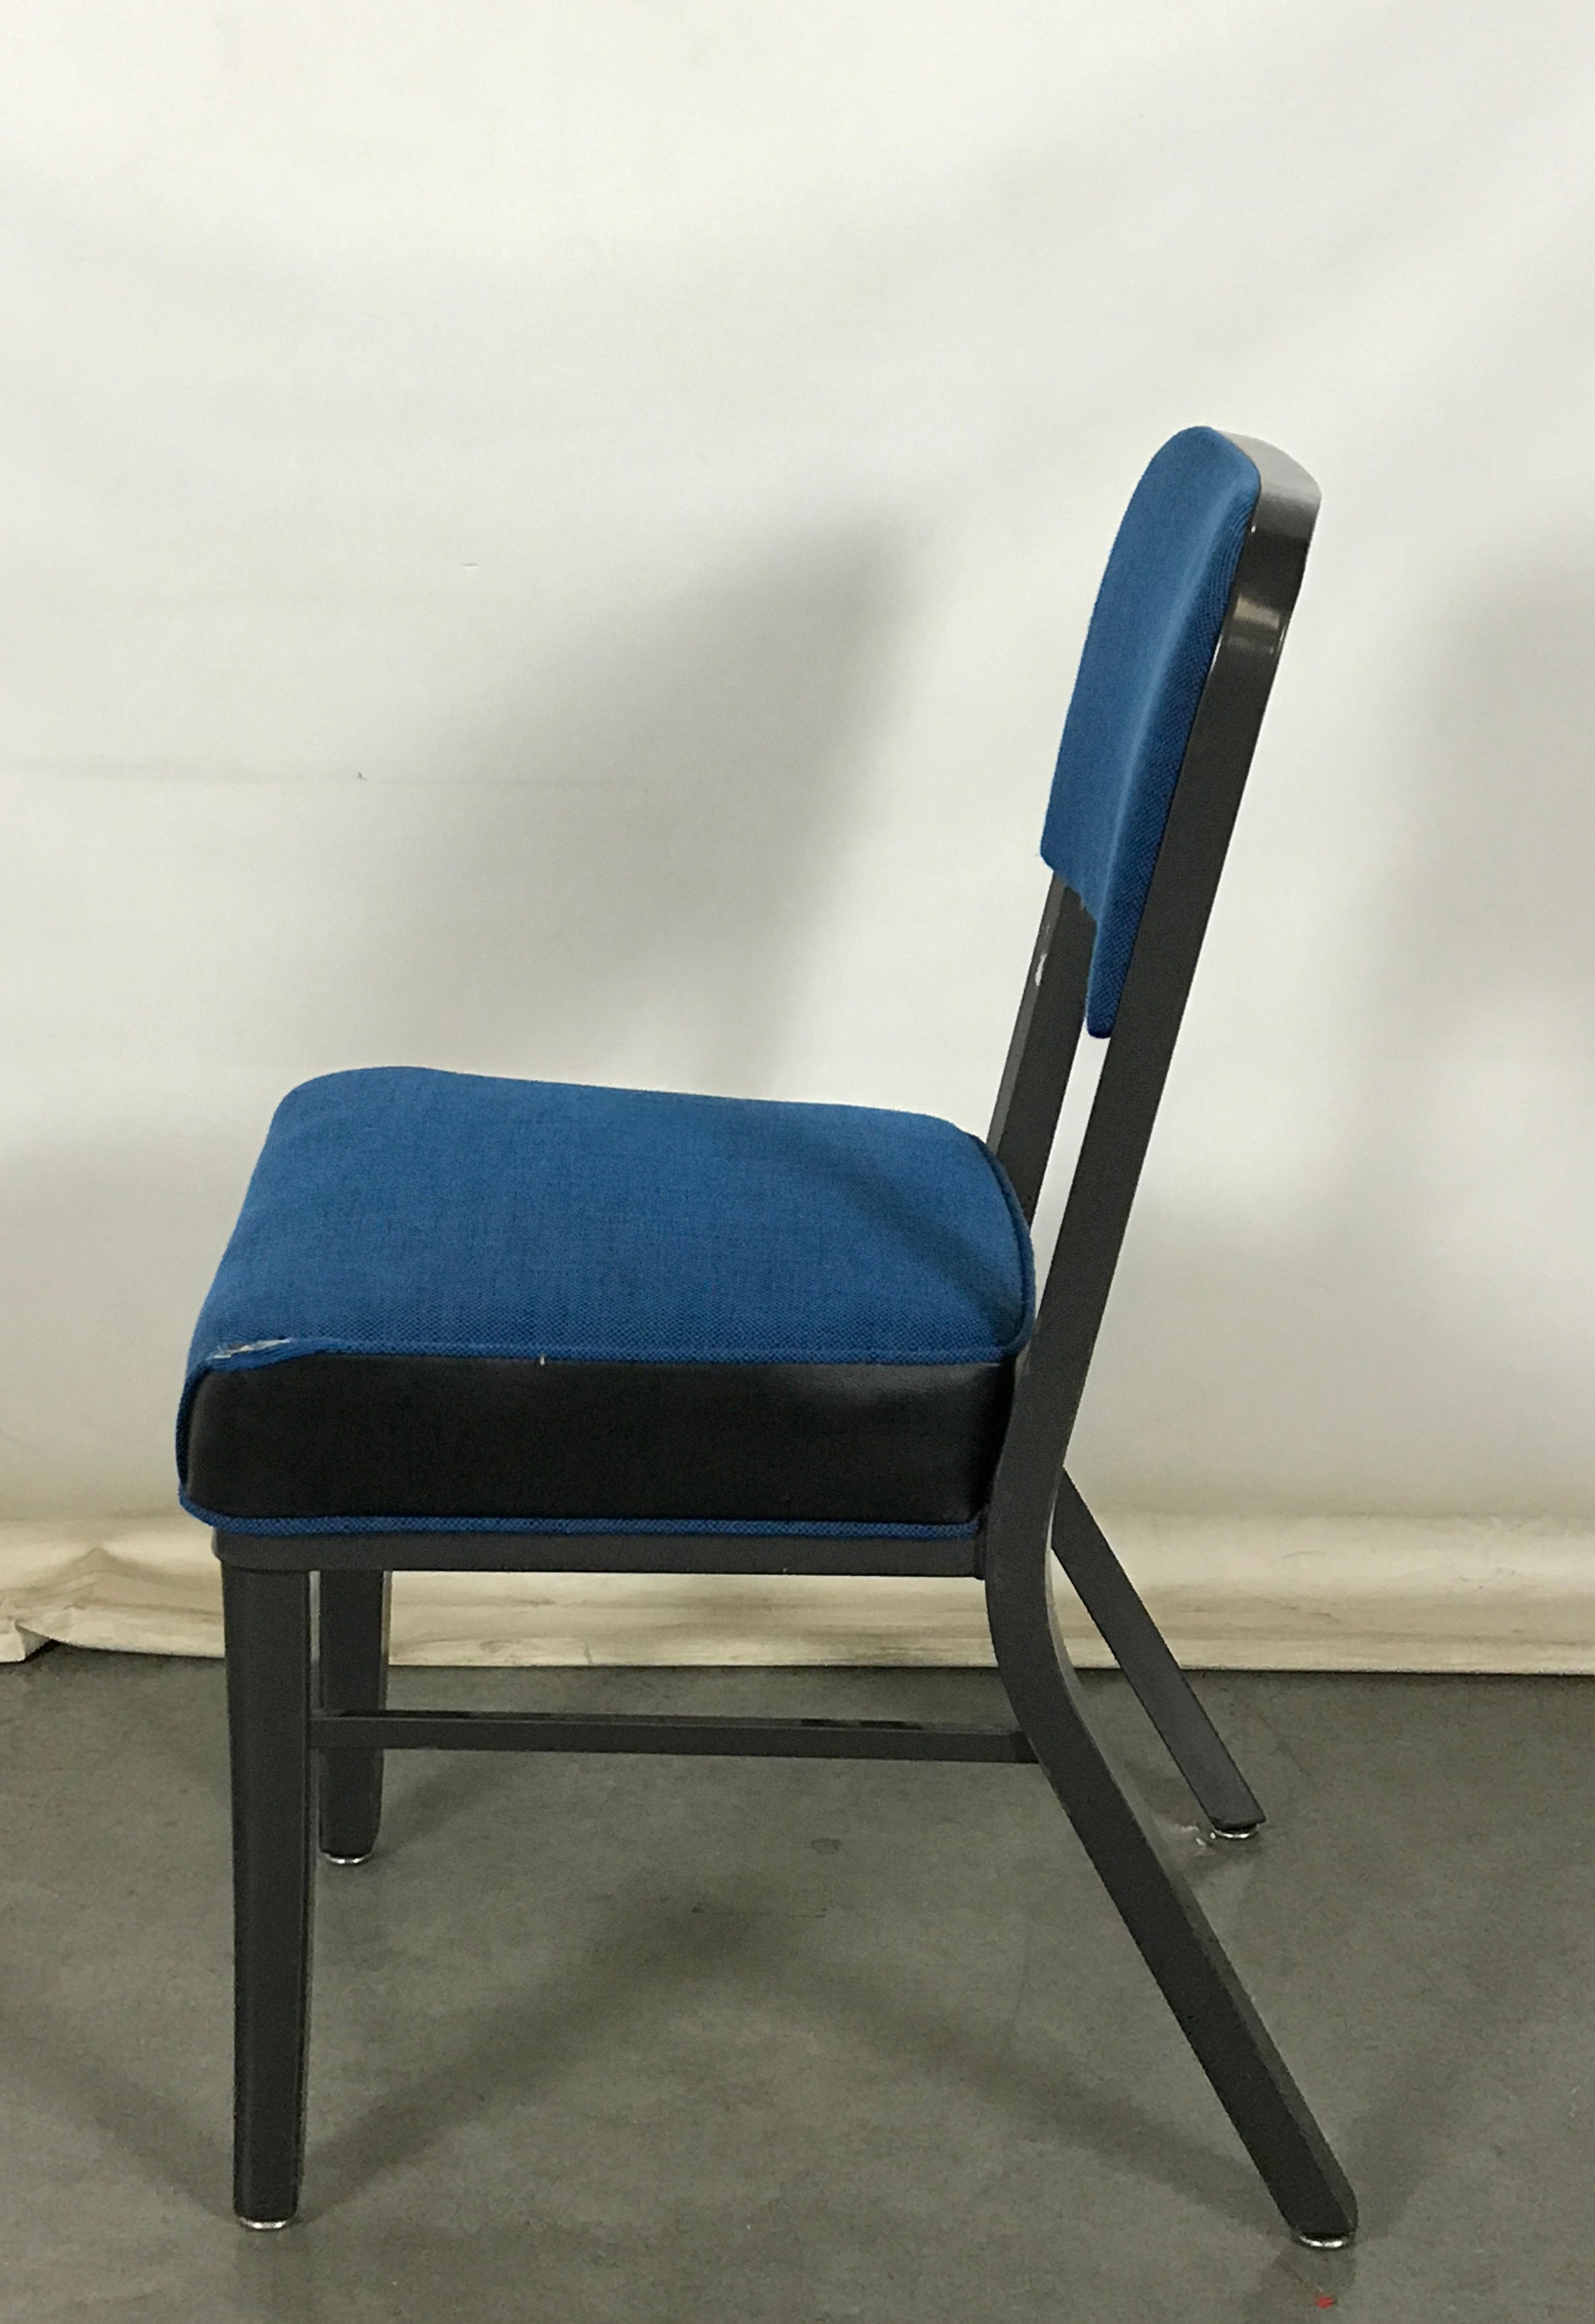 Vintage Steelcase Blue Upholstery Tanker Chair